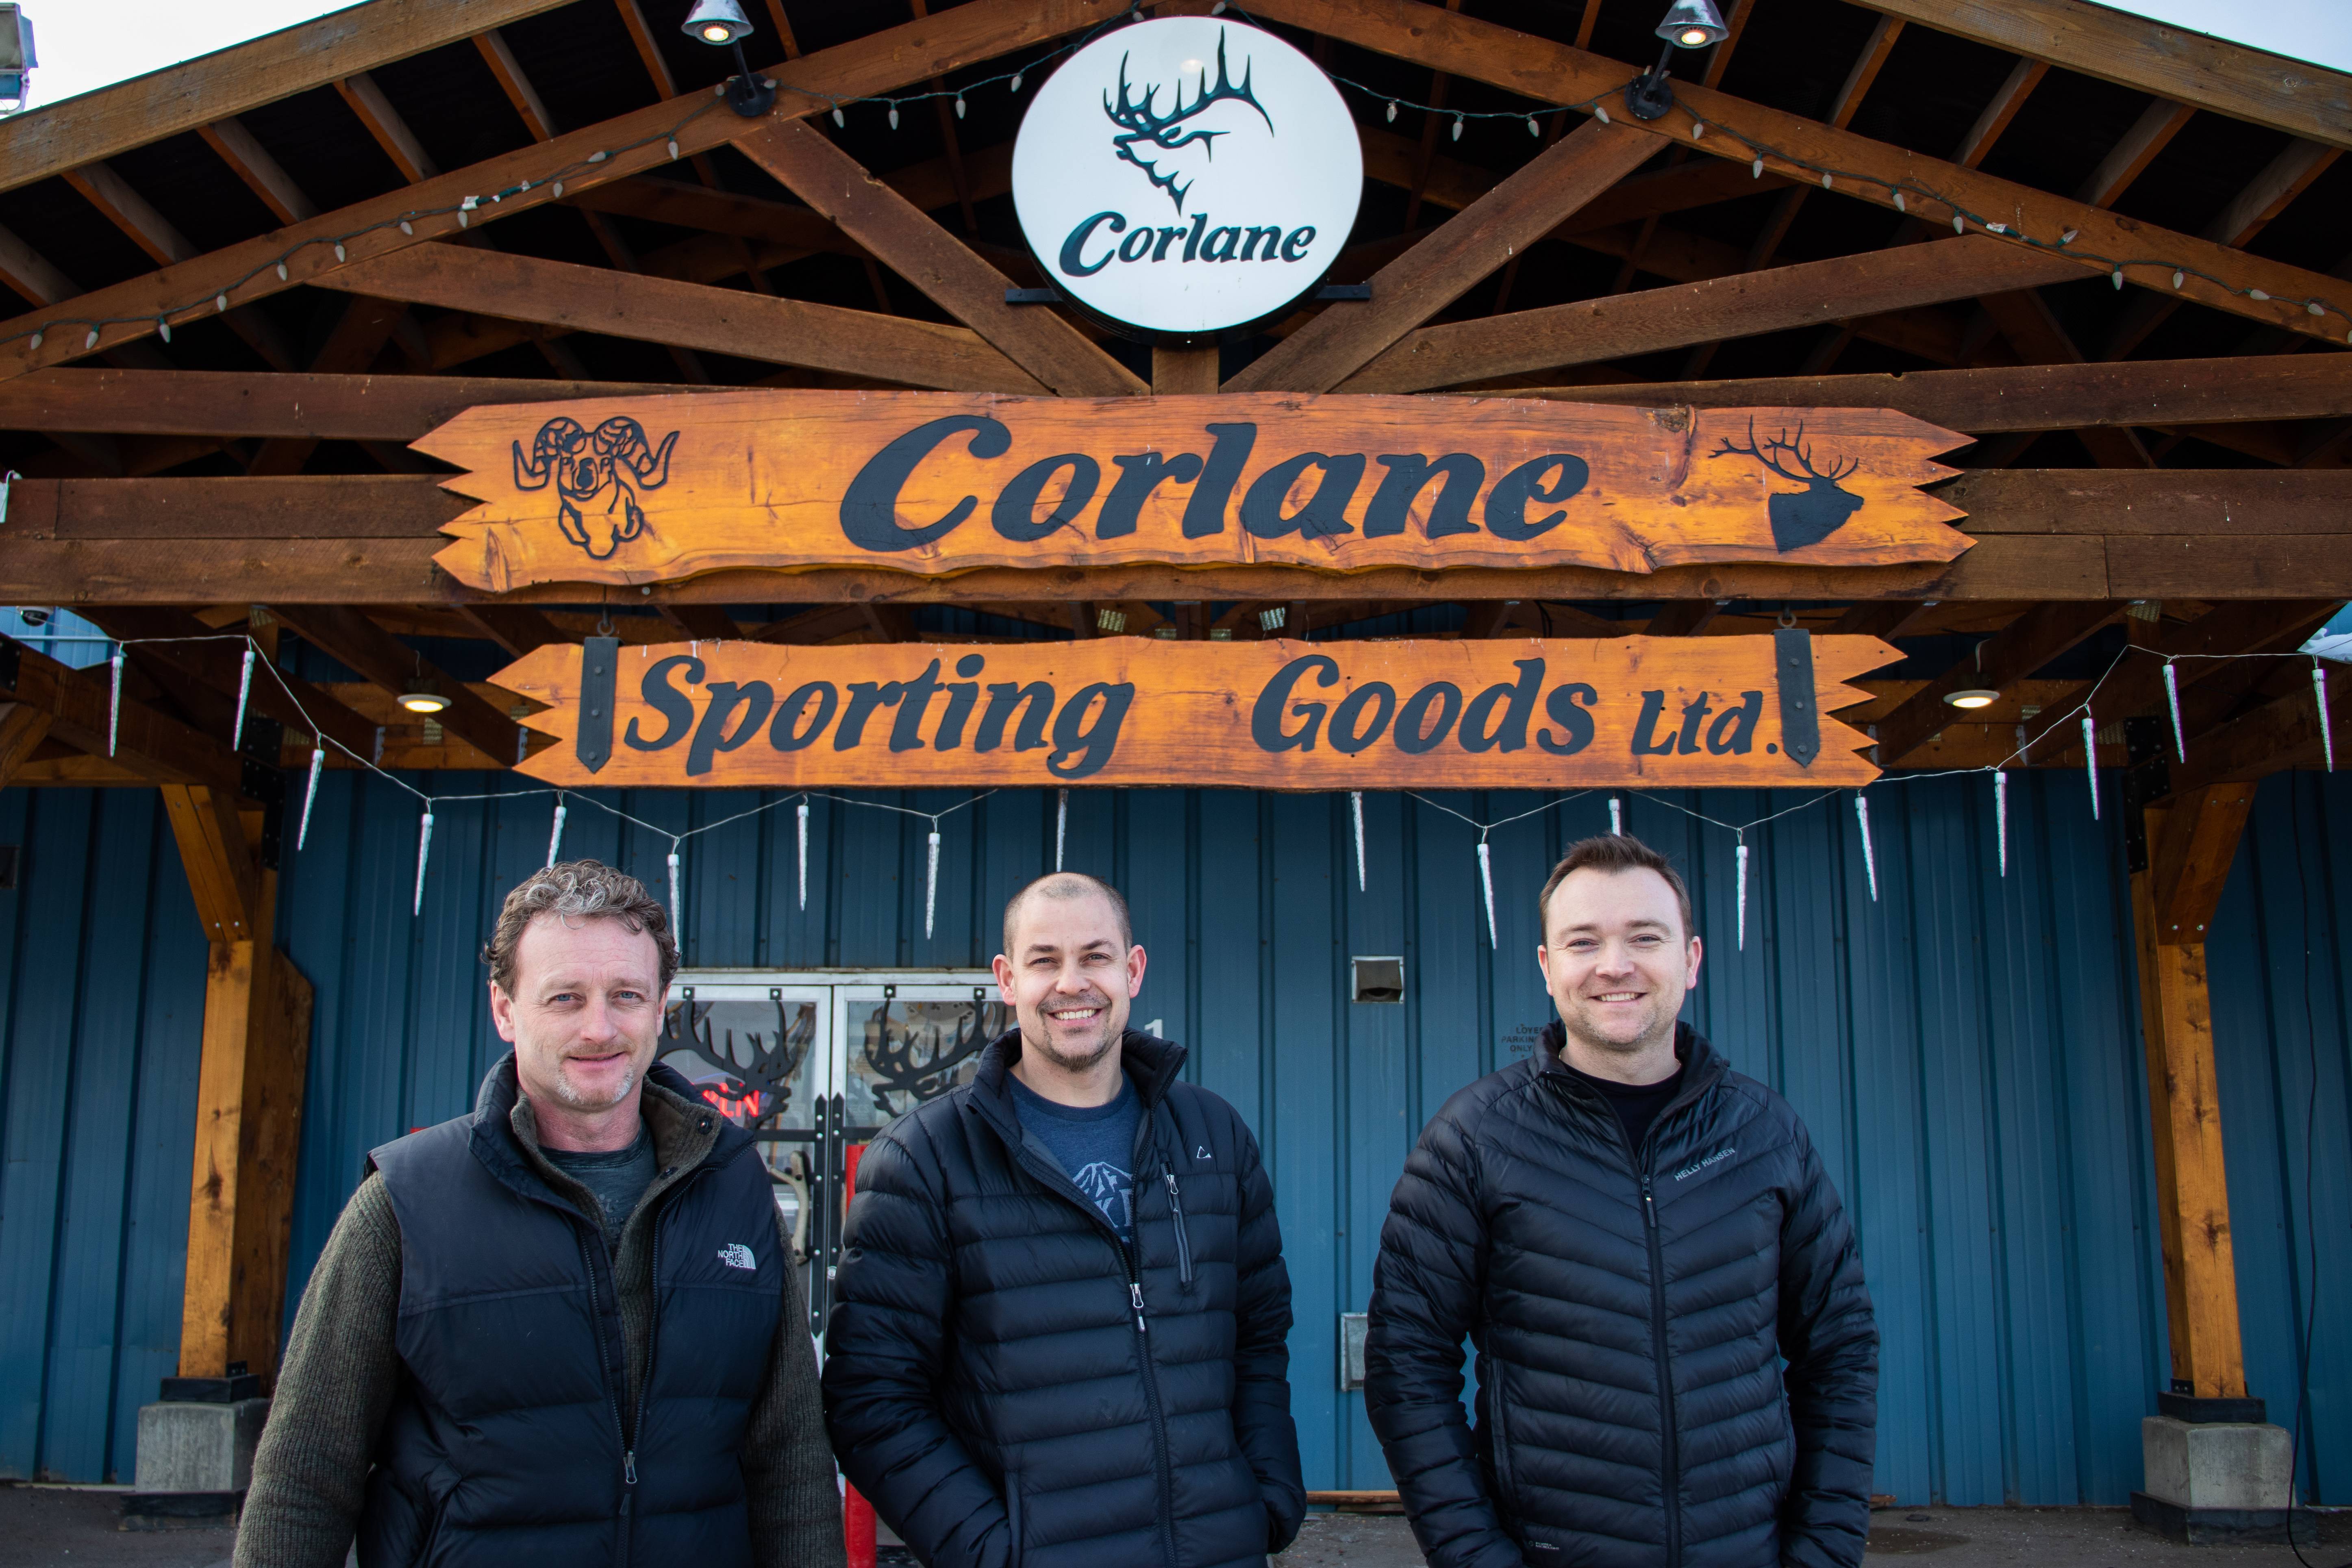 Corlane Sporting Goods Ltd. - Corlane Sporting Goods Ltd.